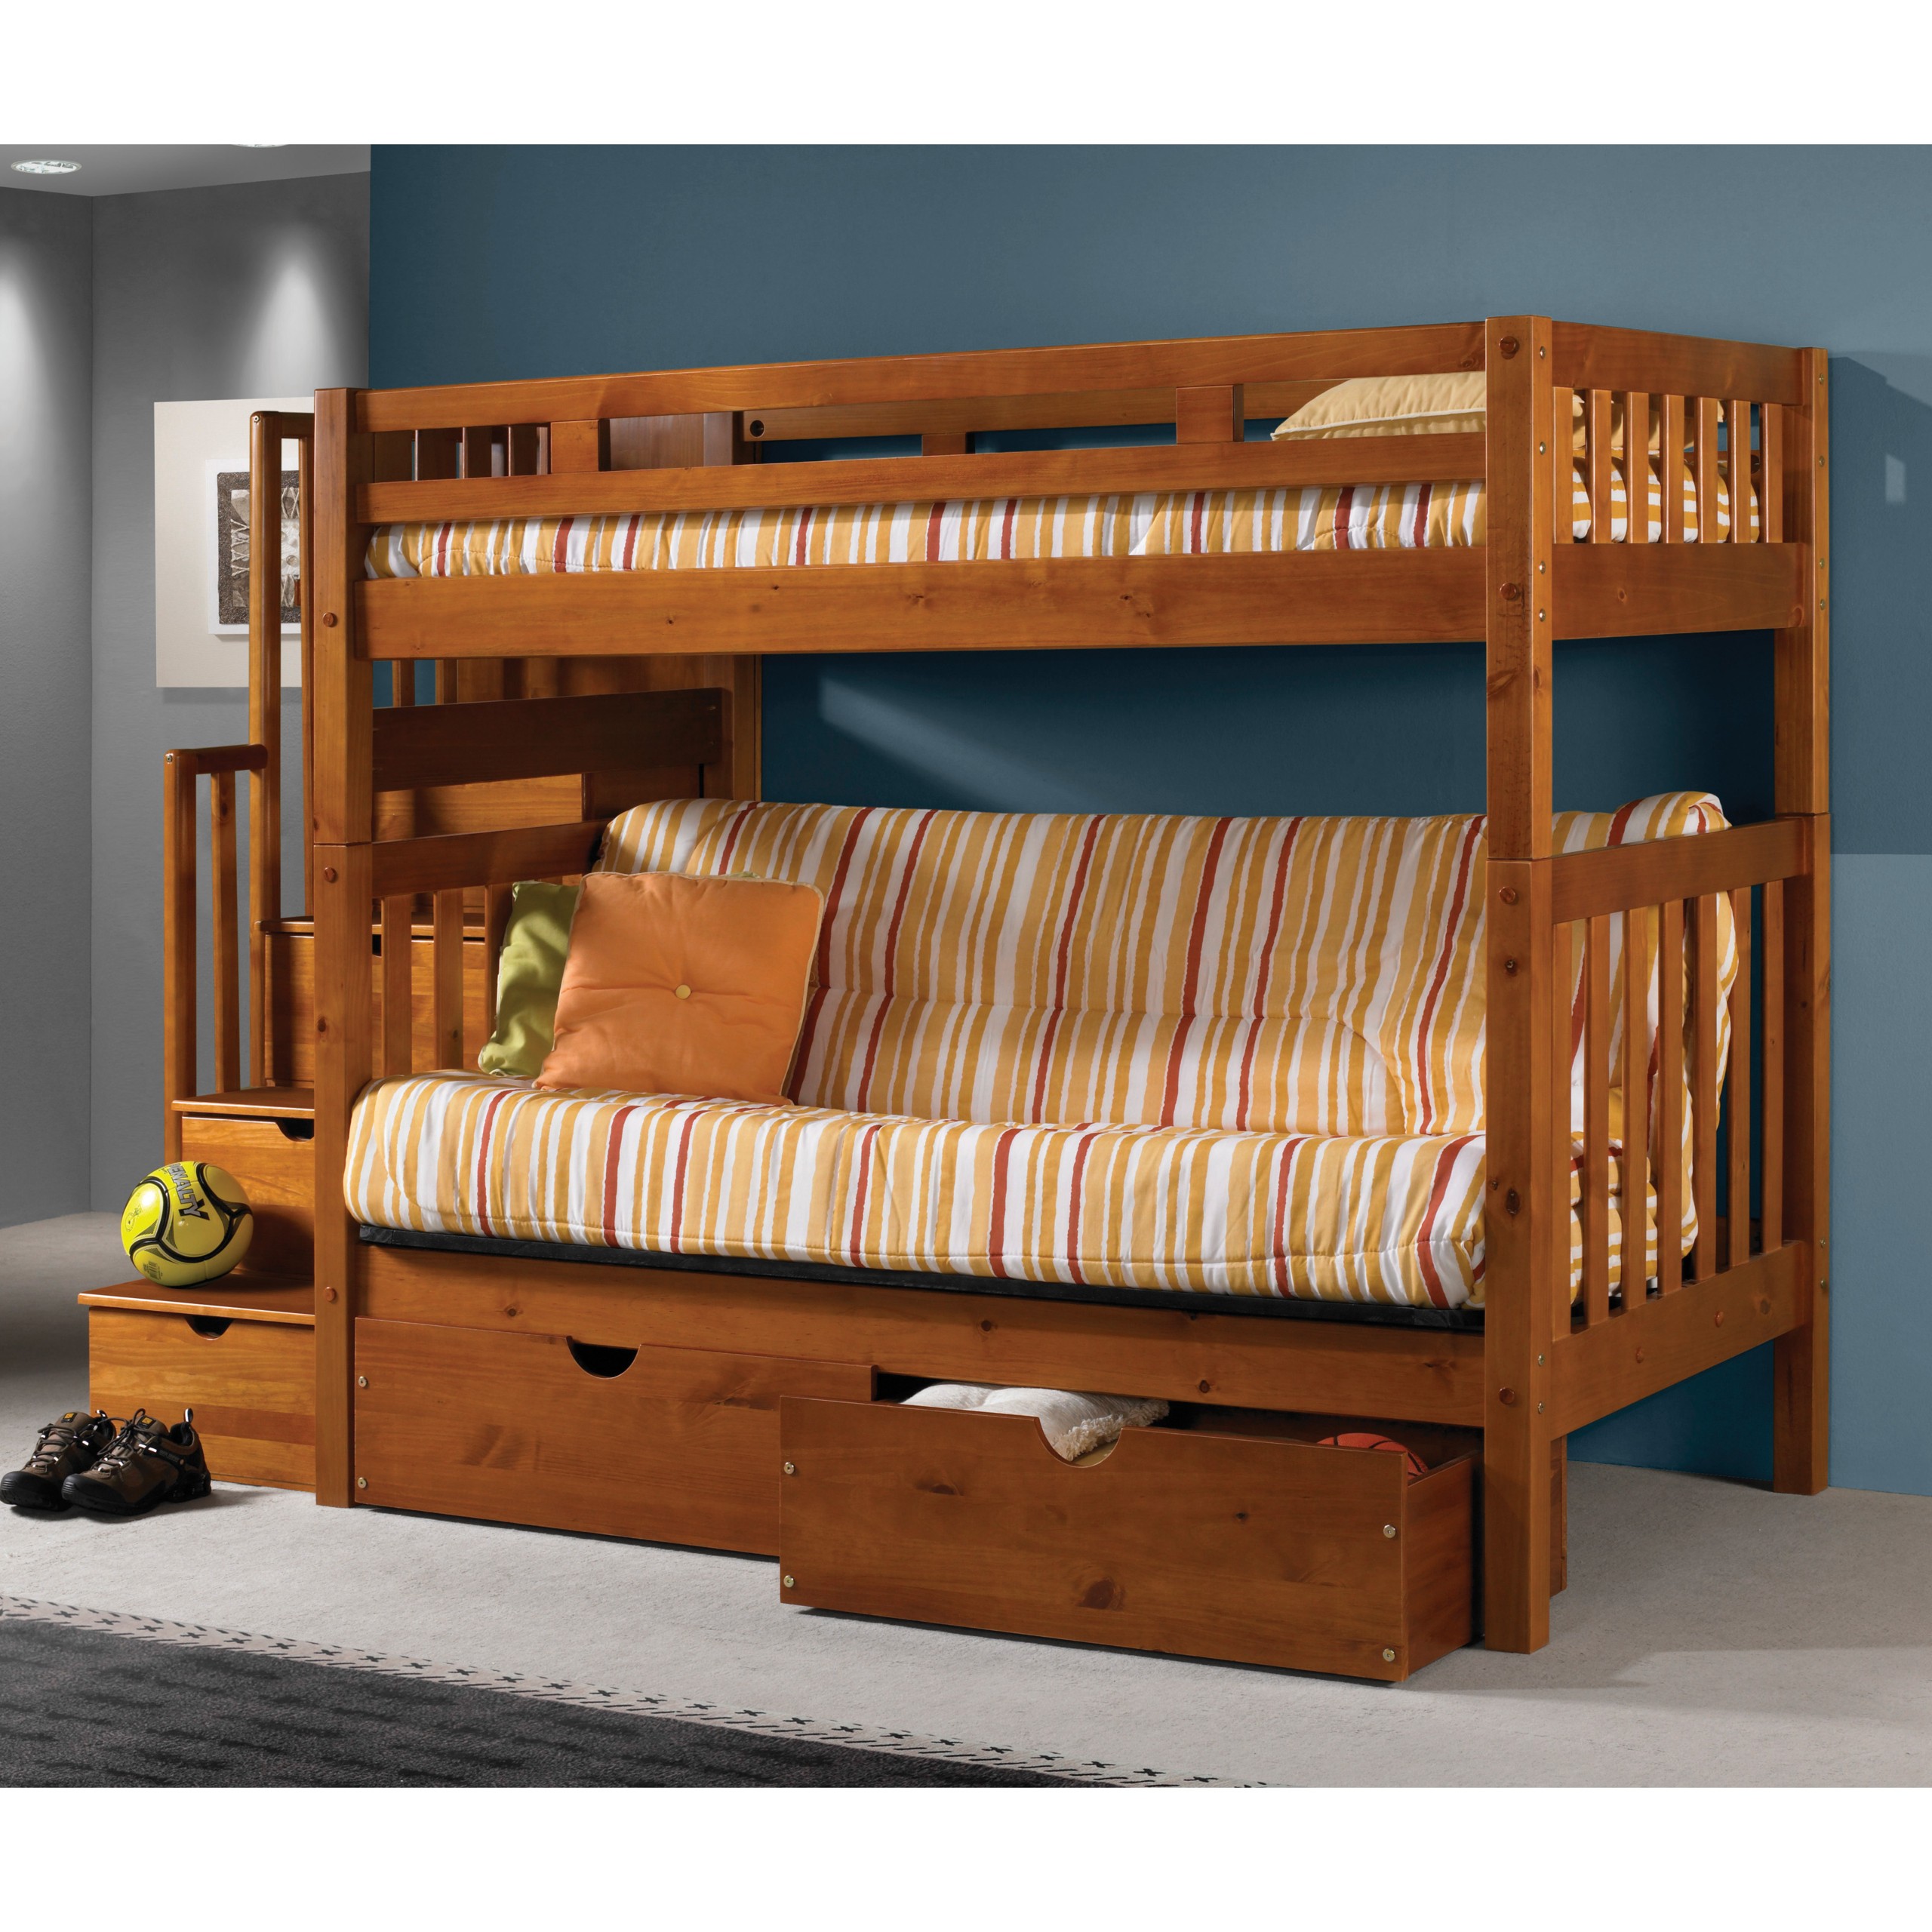 Donco twin futon stairway bunk bed honey bunk beds